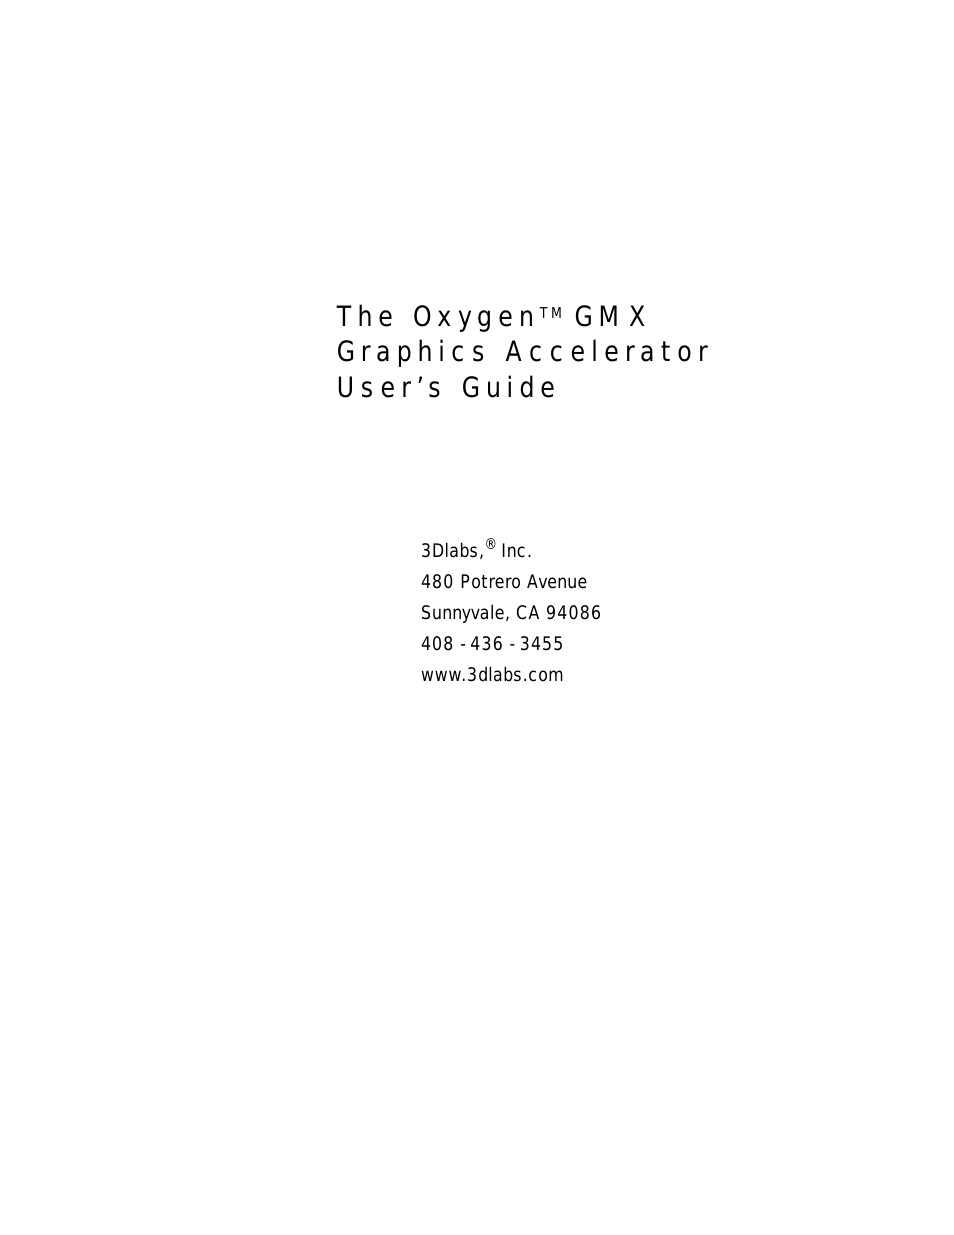 Oxygen GMX